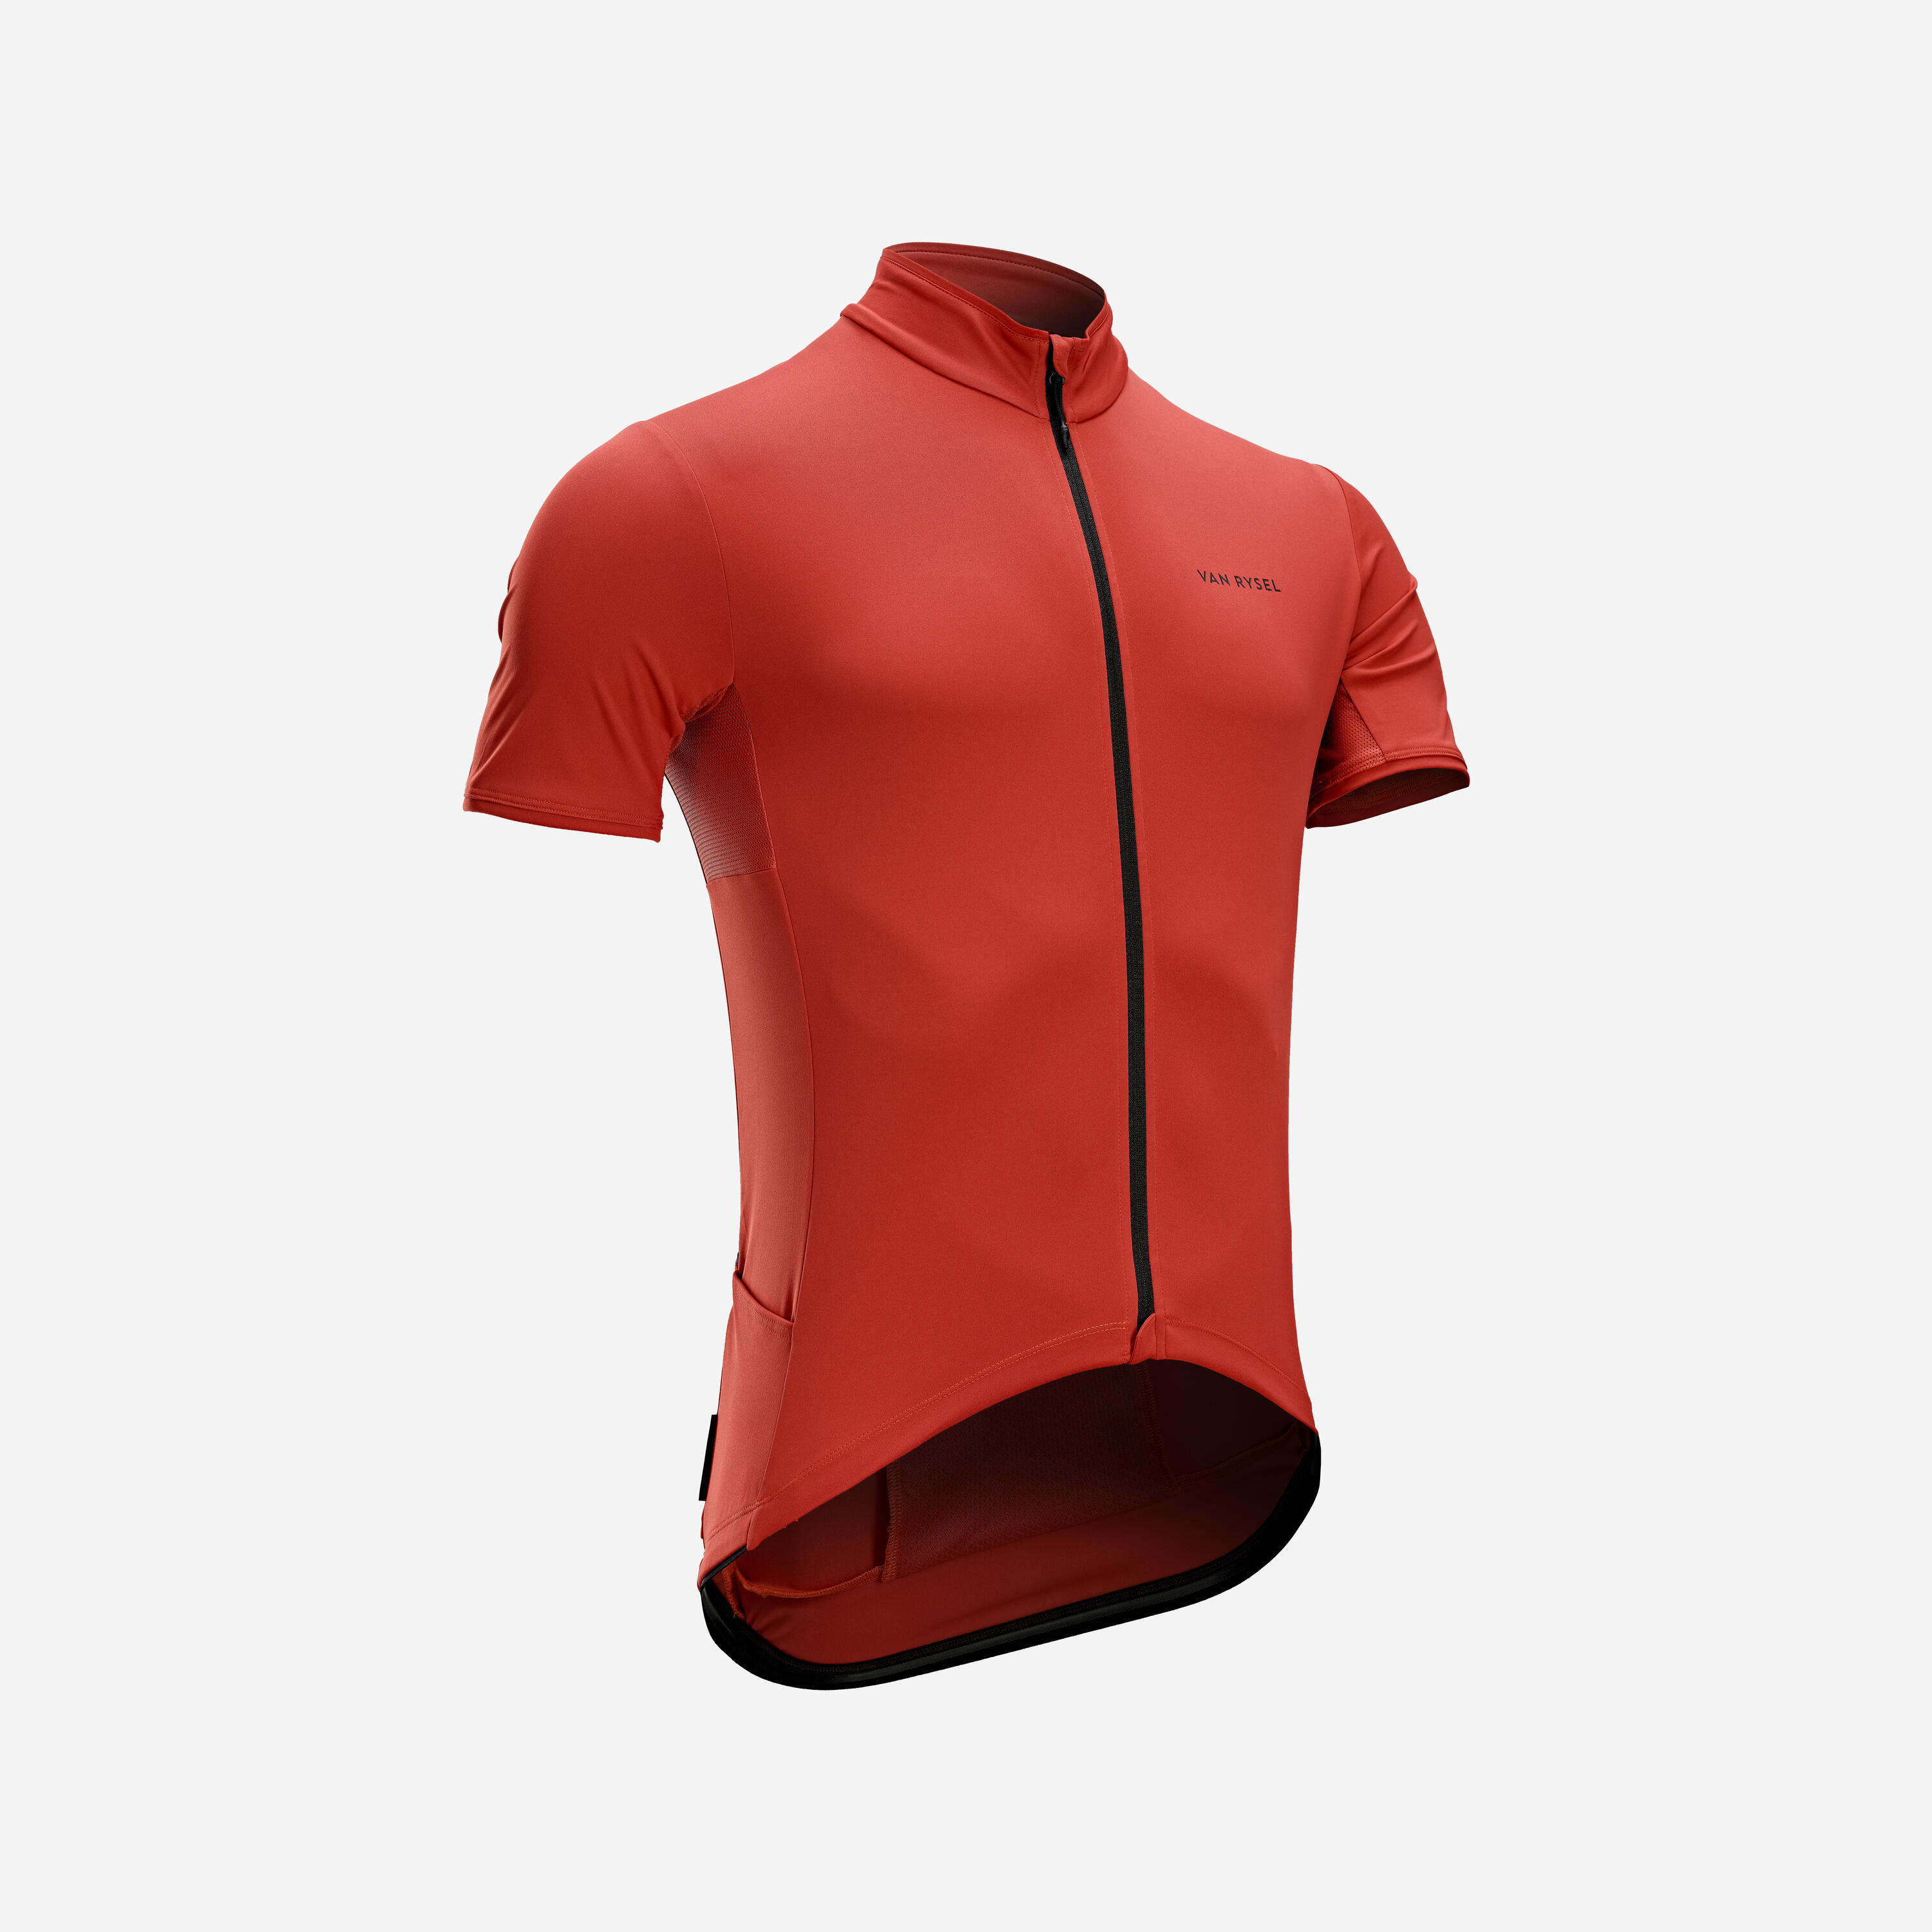 Men's Road Cycling Short-Sleeved Summer Jersey Endurance - Brick Red 2/6